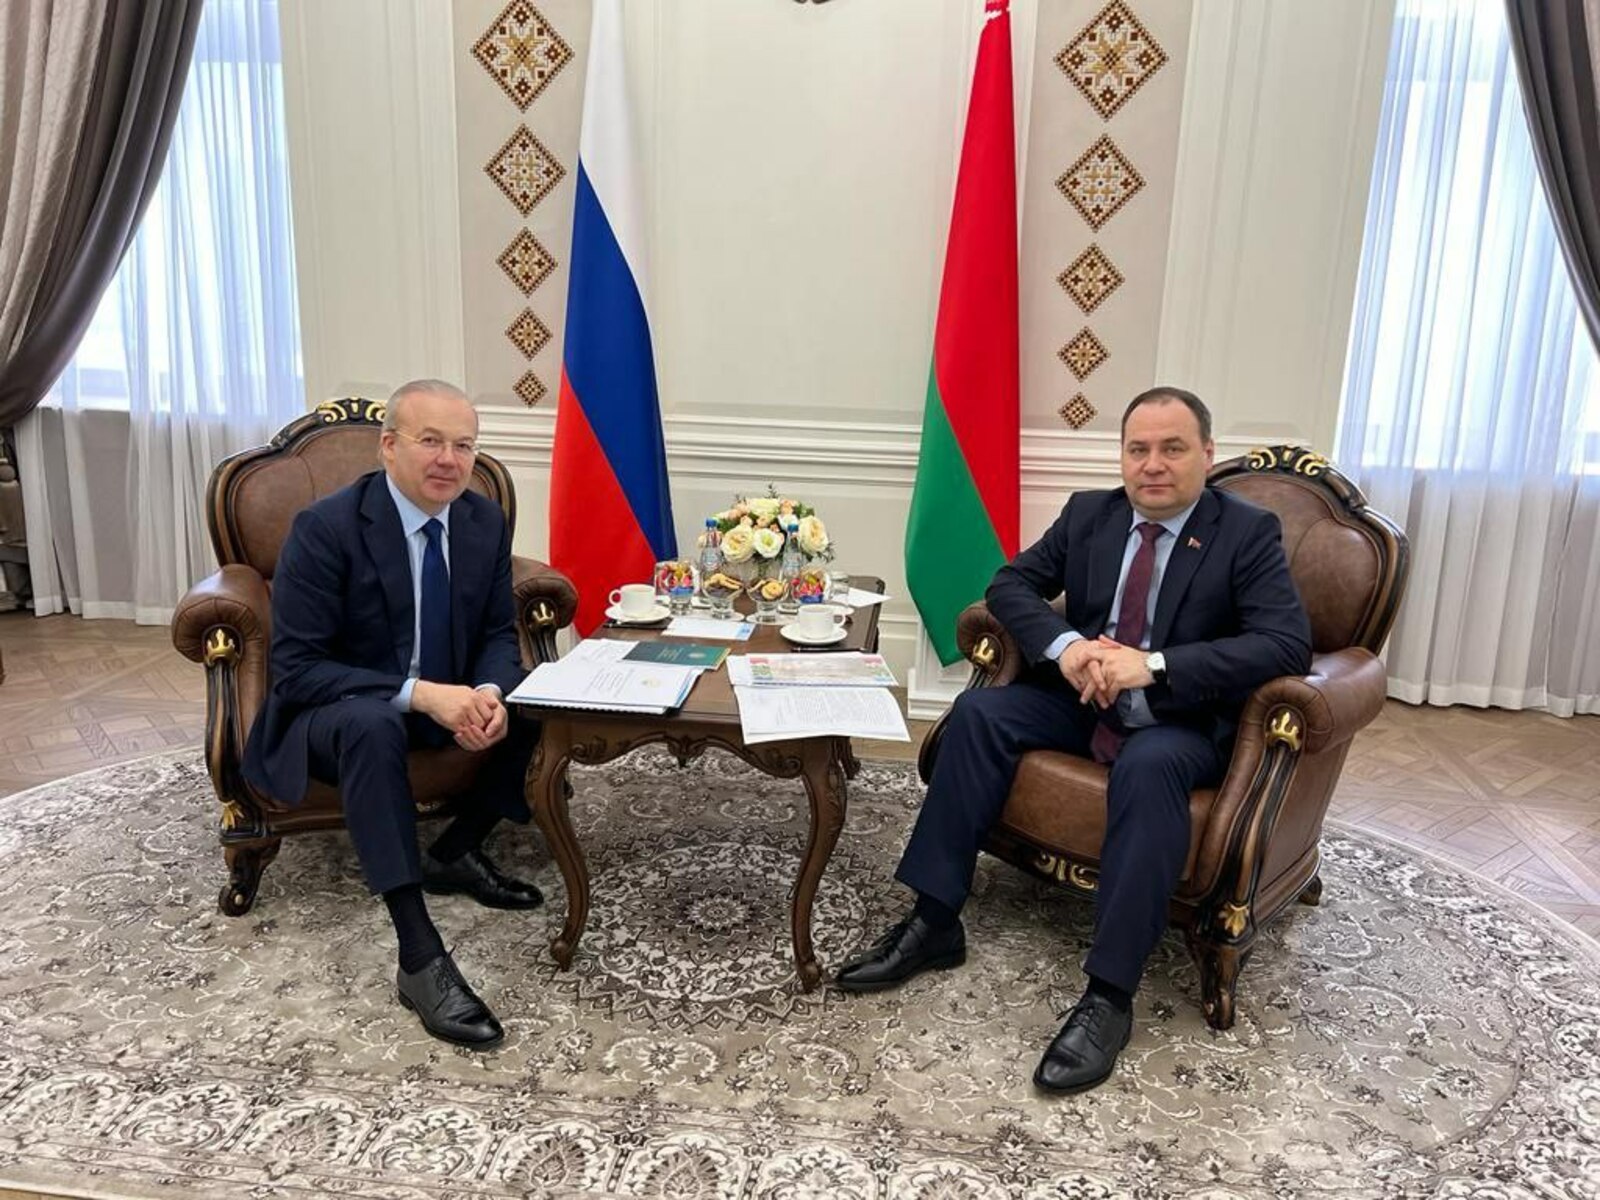 В Минске встретились два премьер-министра - Башкирии и Беларуси